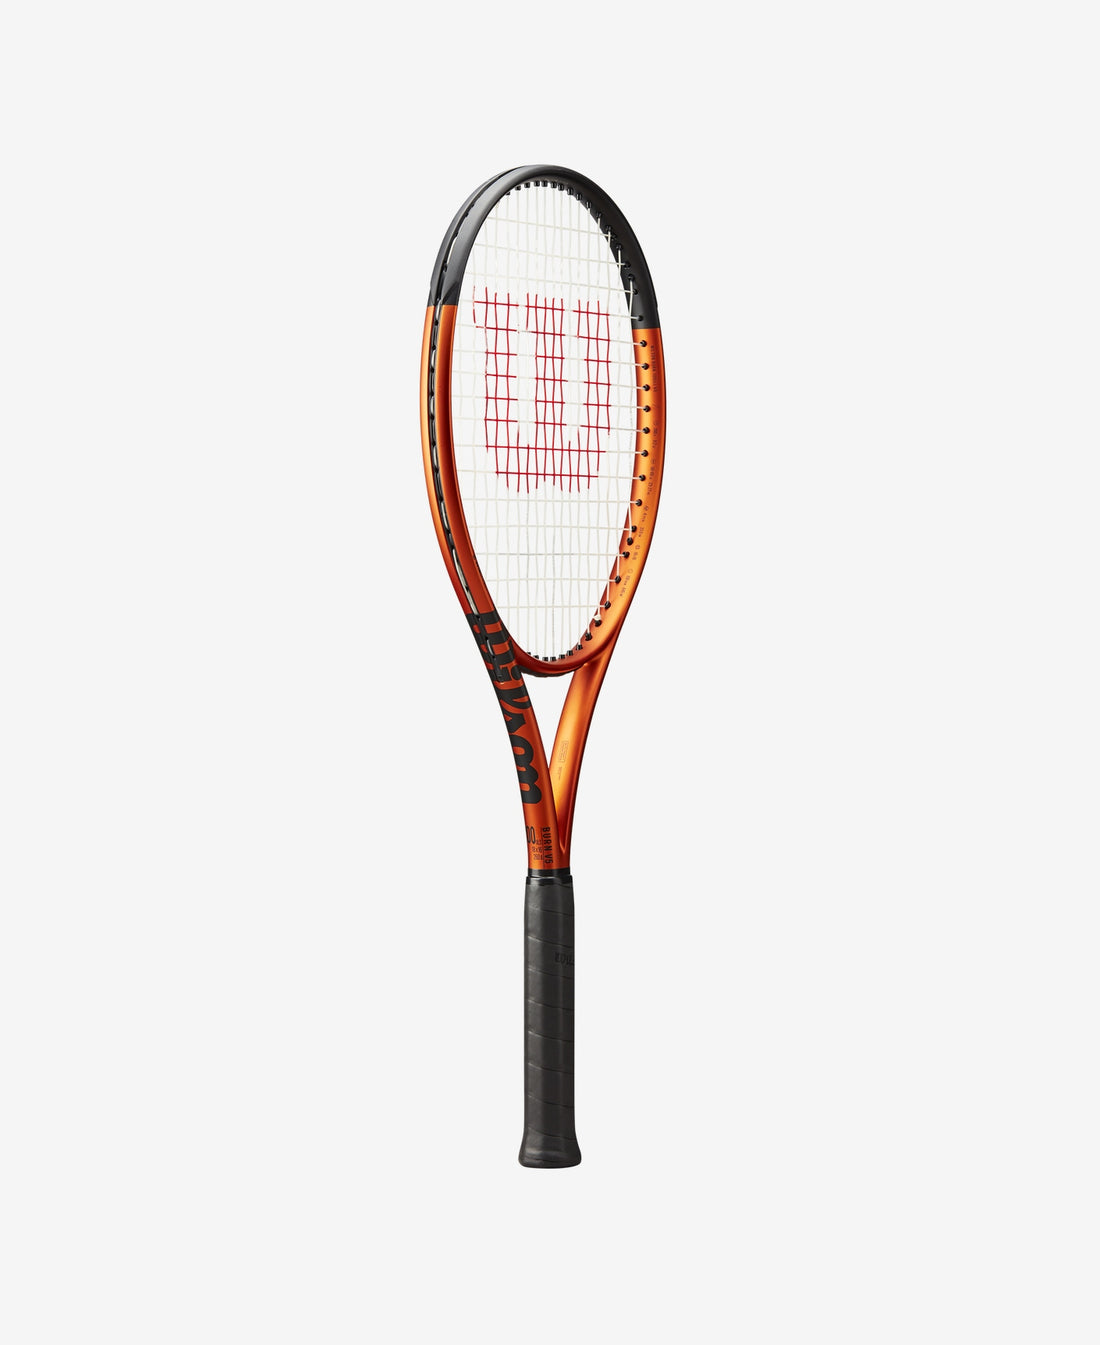 Wilson Burn 100ULS V5 Tennis Racket: Power and Precision